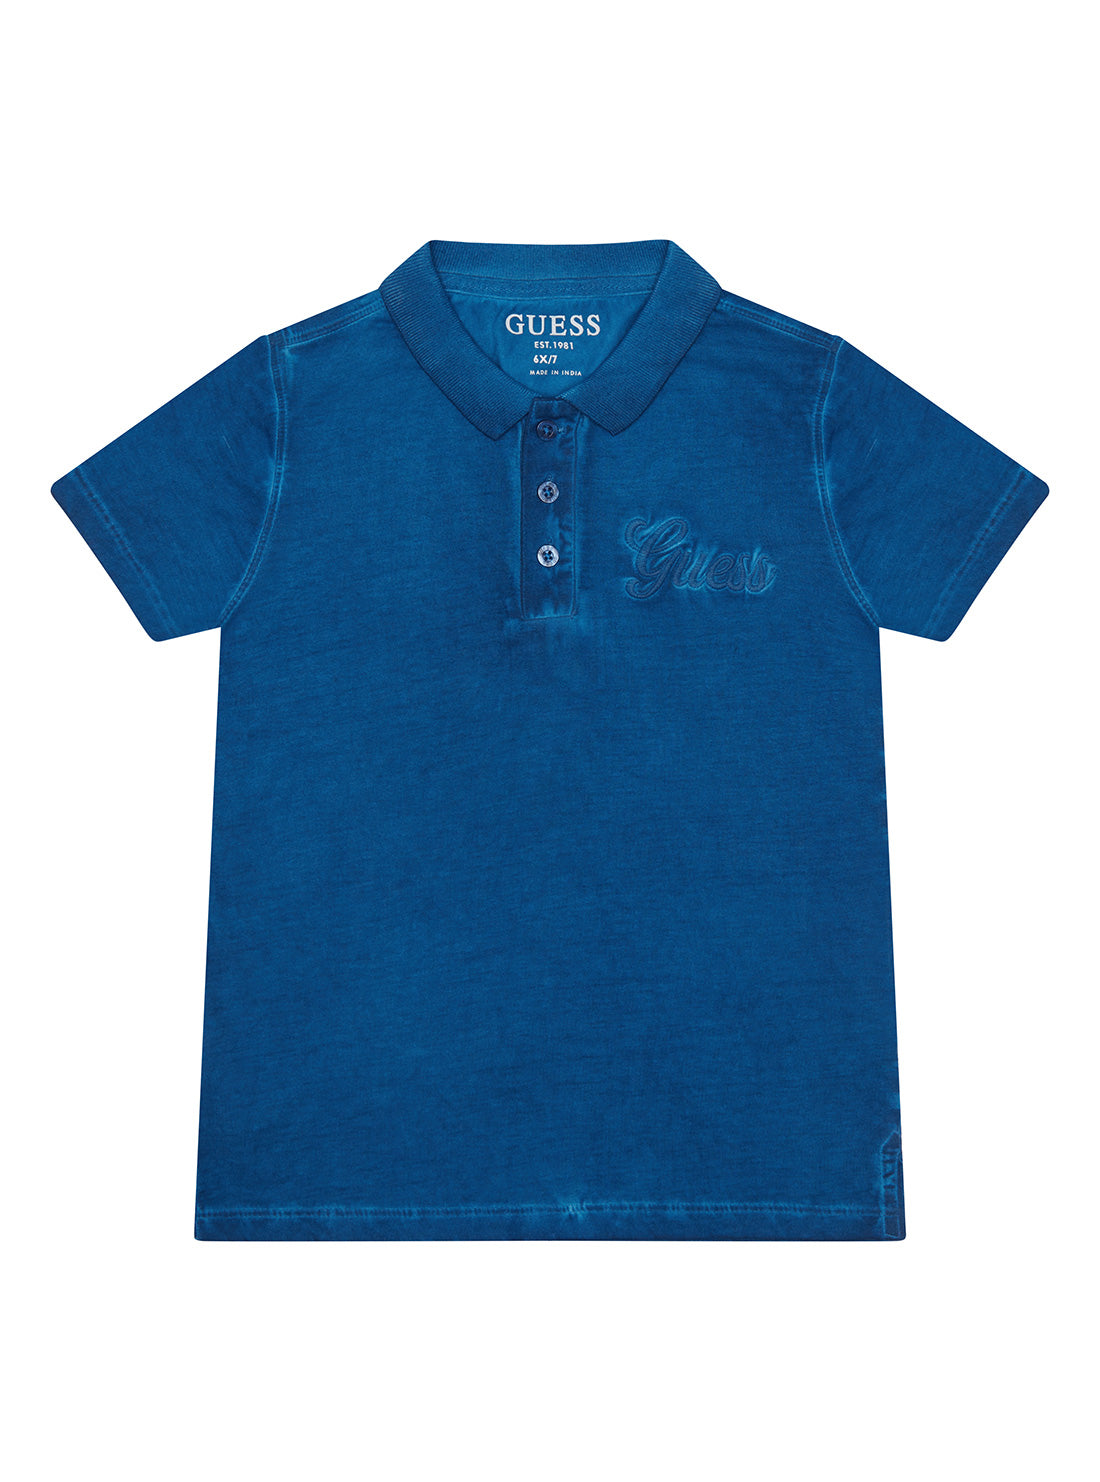 GUESS Big Boy Blue Washed Polo T-Shirt (8-16) L2GP05K5M20 Front View